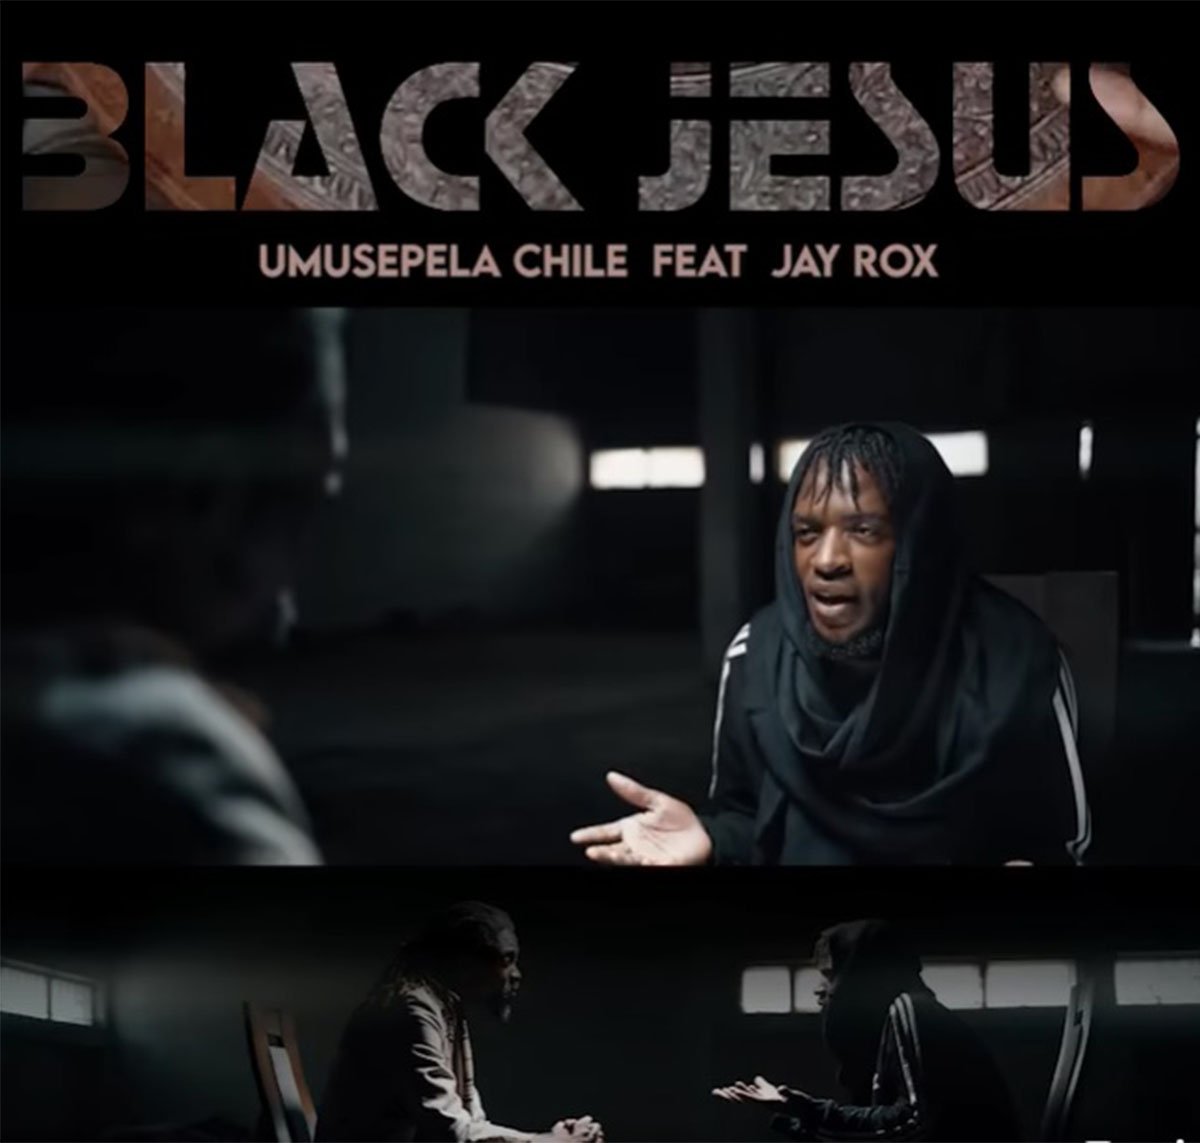 Black Jesus (Ft Jay Rox)